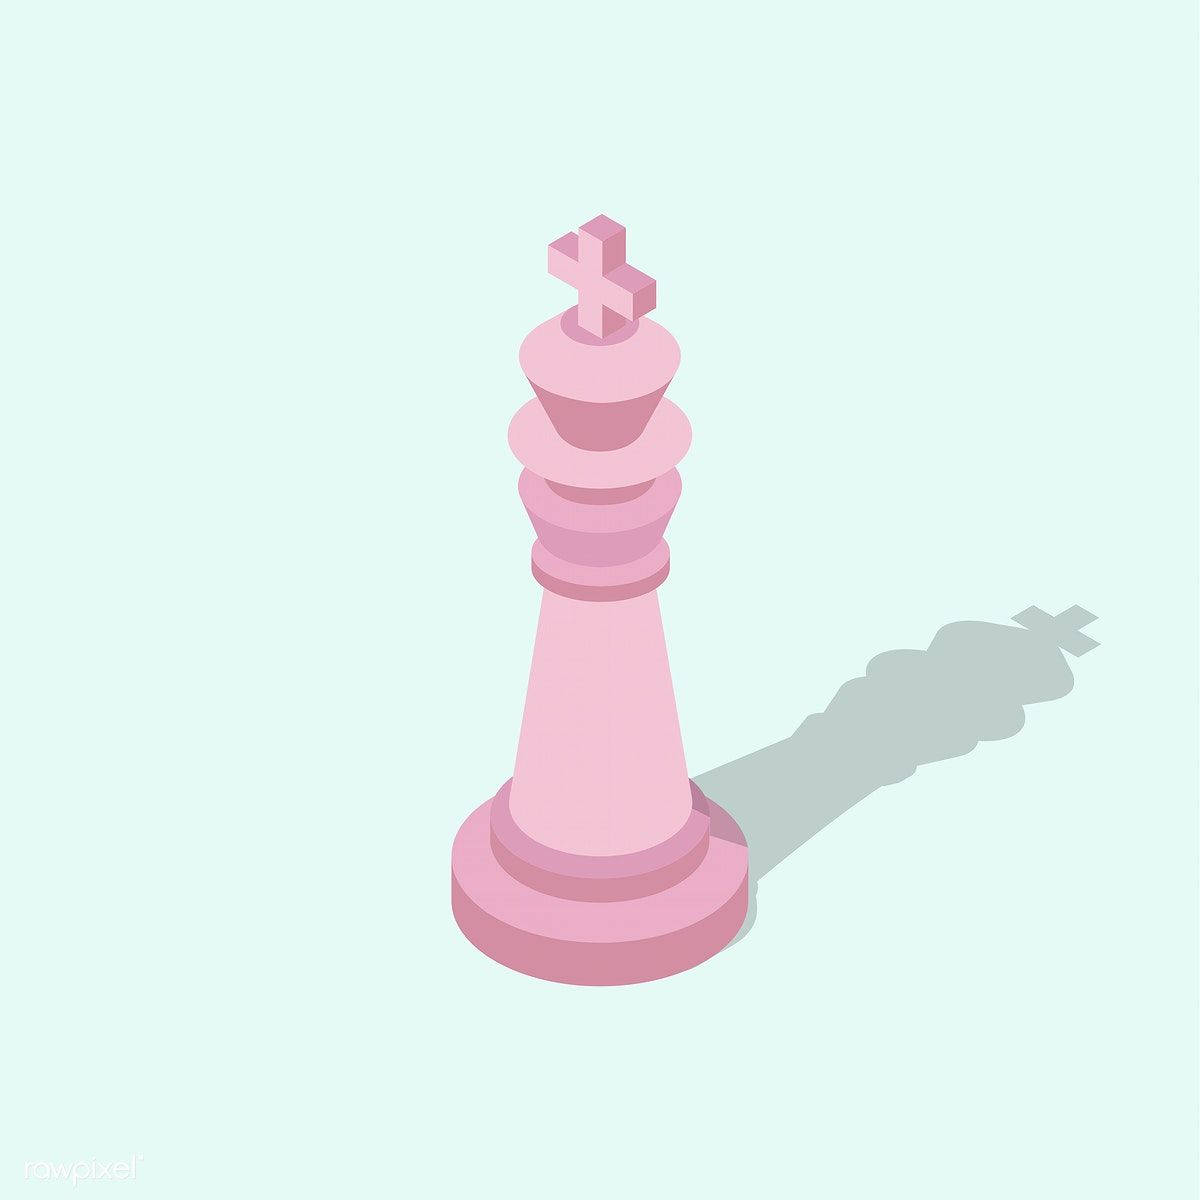 Minimalistic Pink Chess King Background